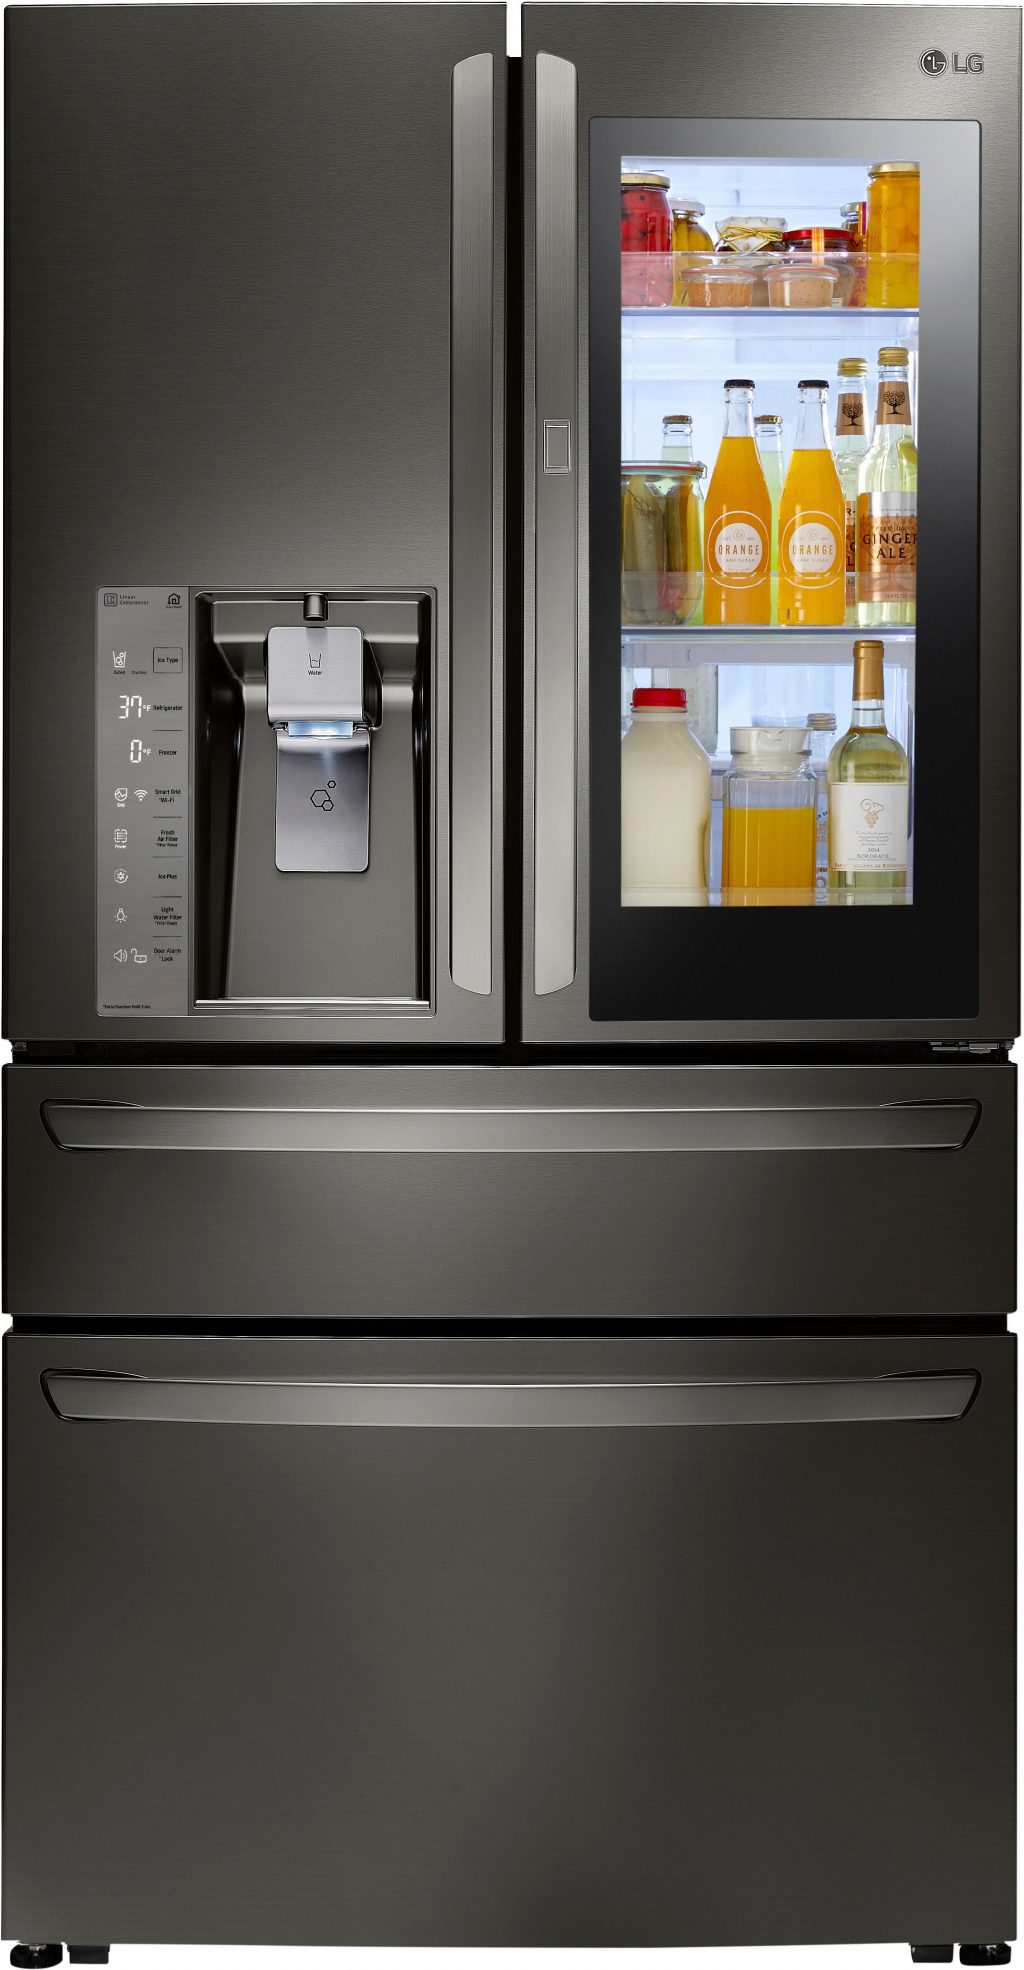 LG InstaView Refrigerator from Best Buy